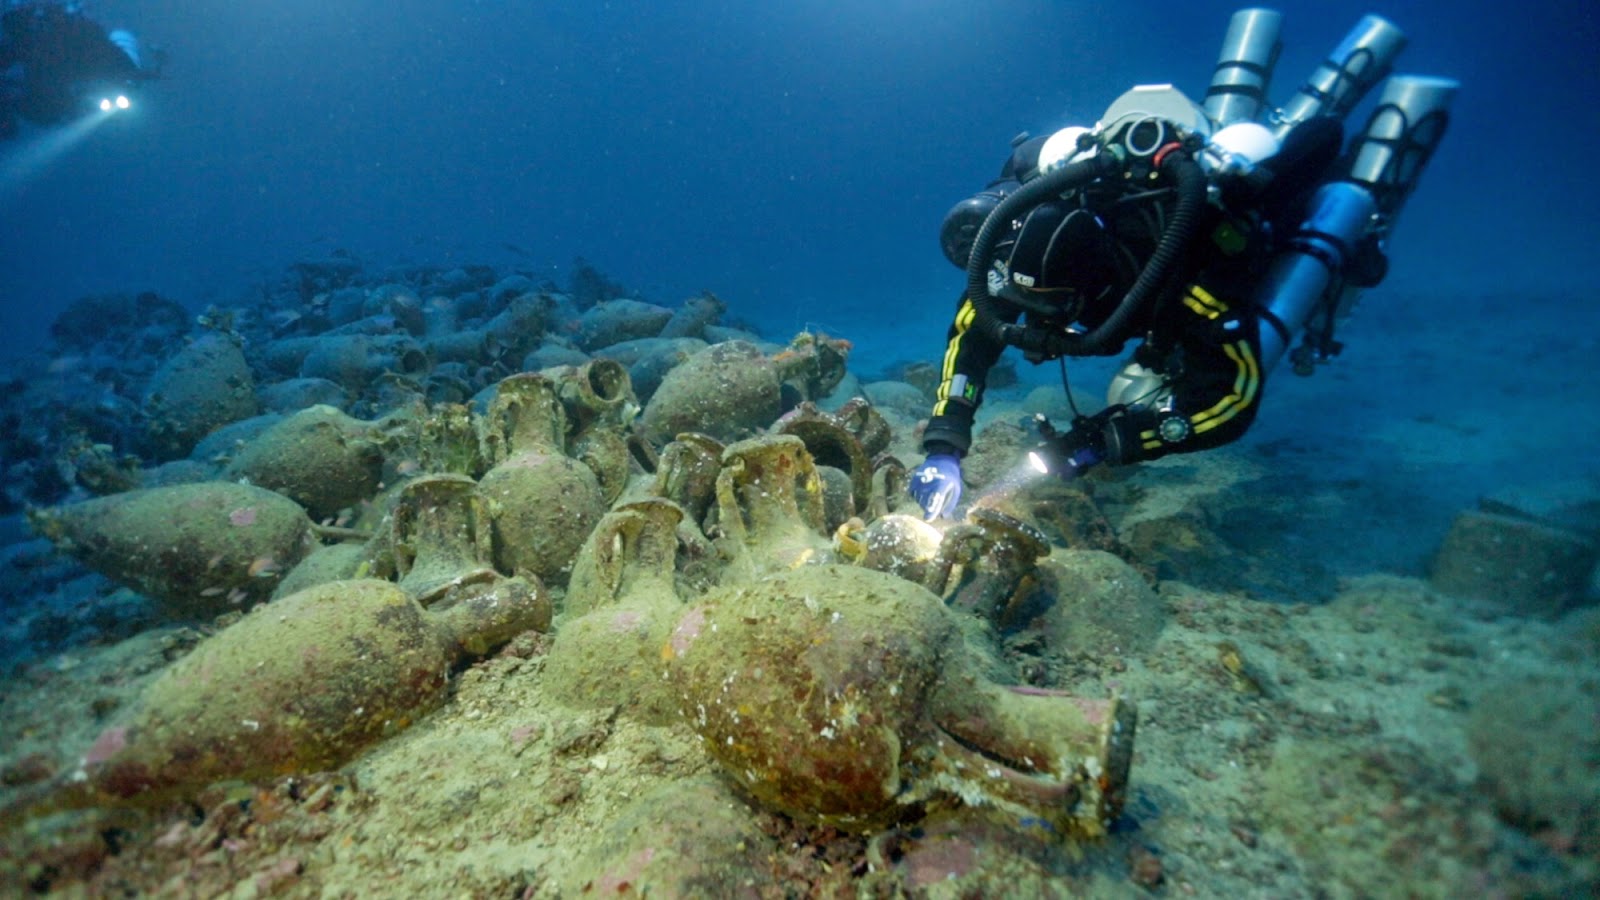 Archeologia subacquea alle Isole Eolie